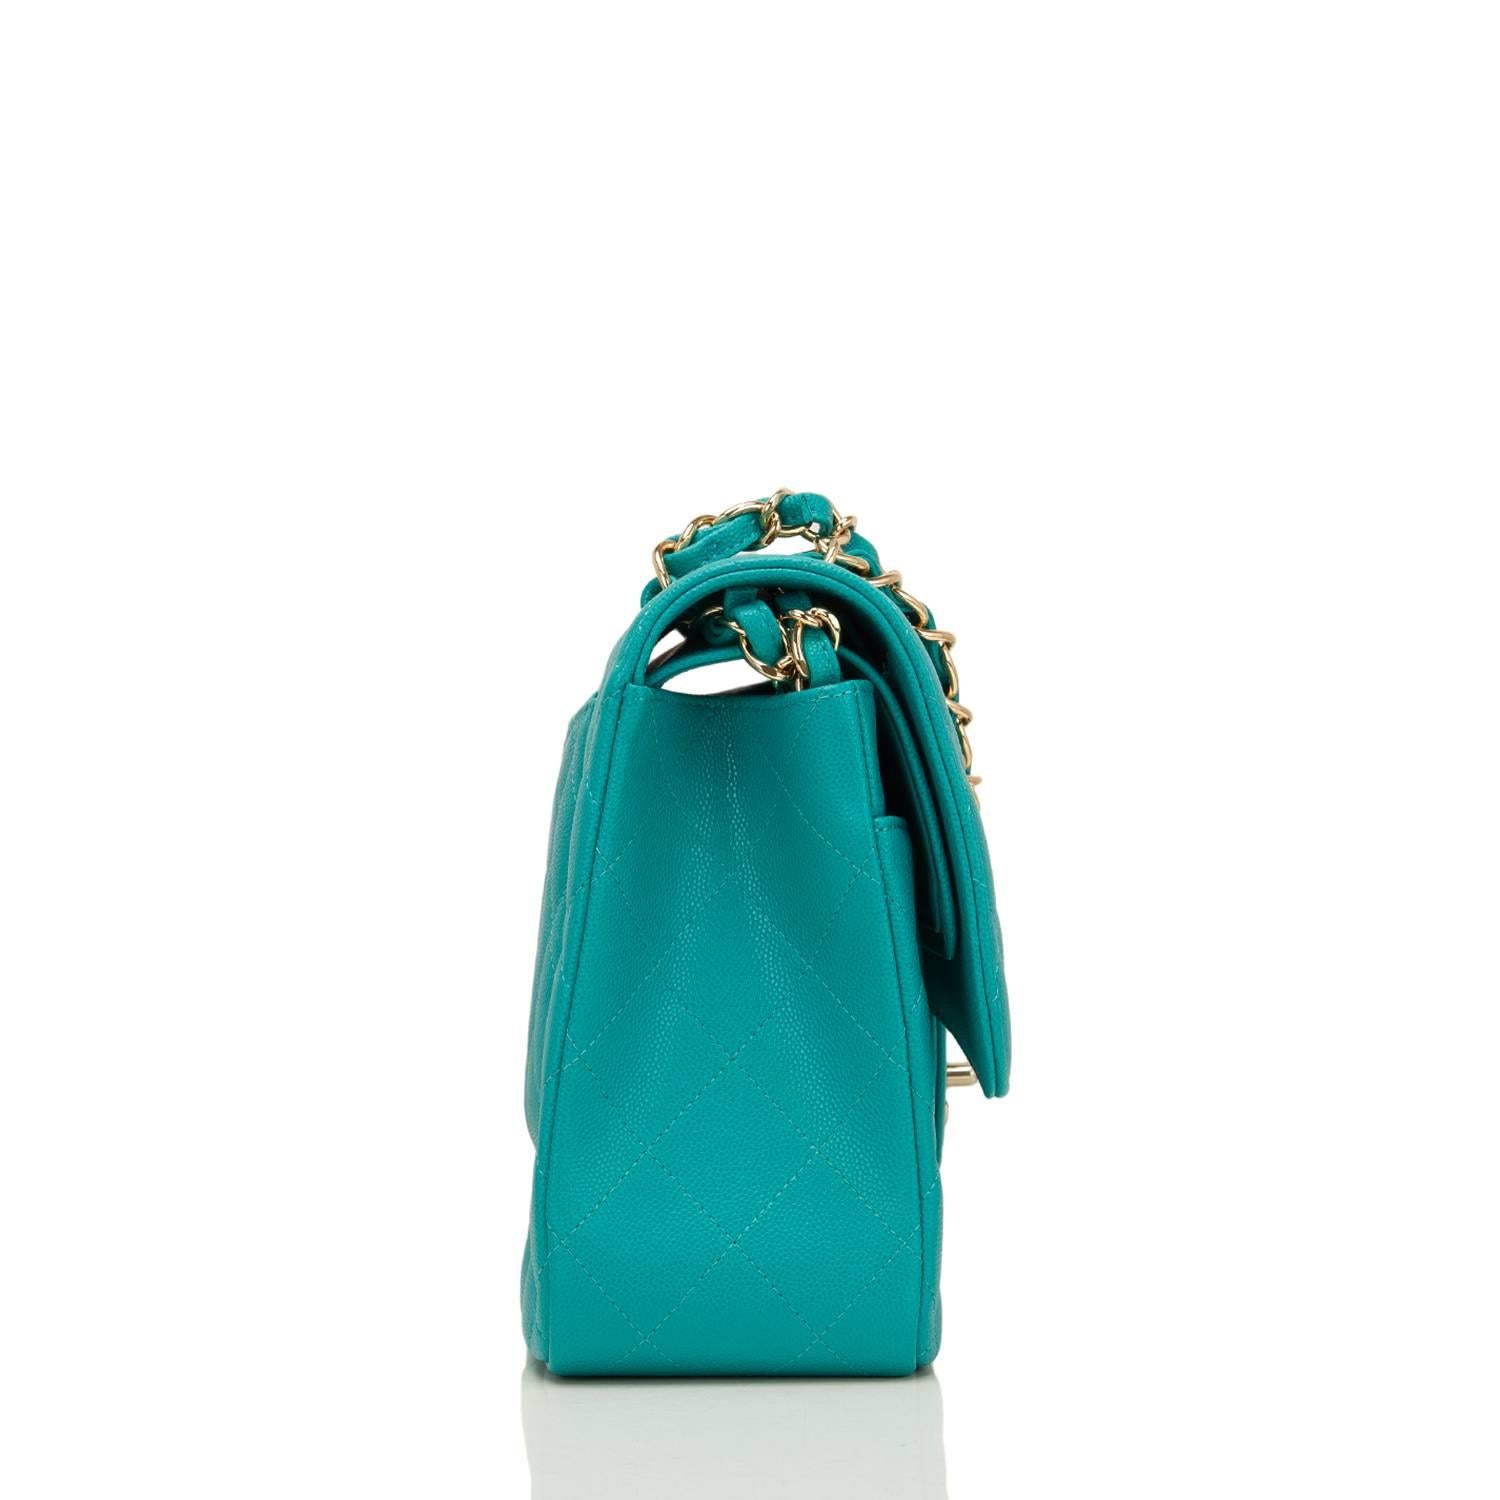 chanel turquoise bag